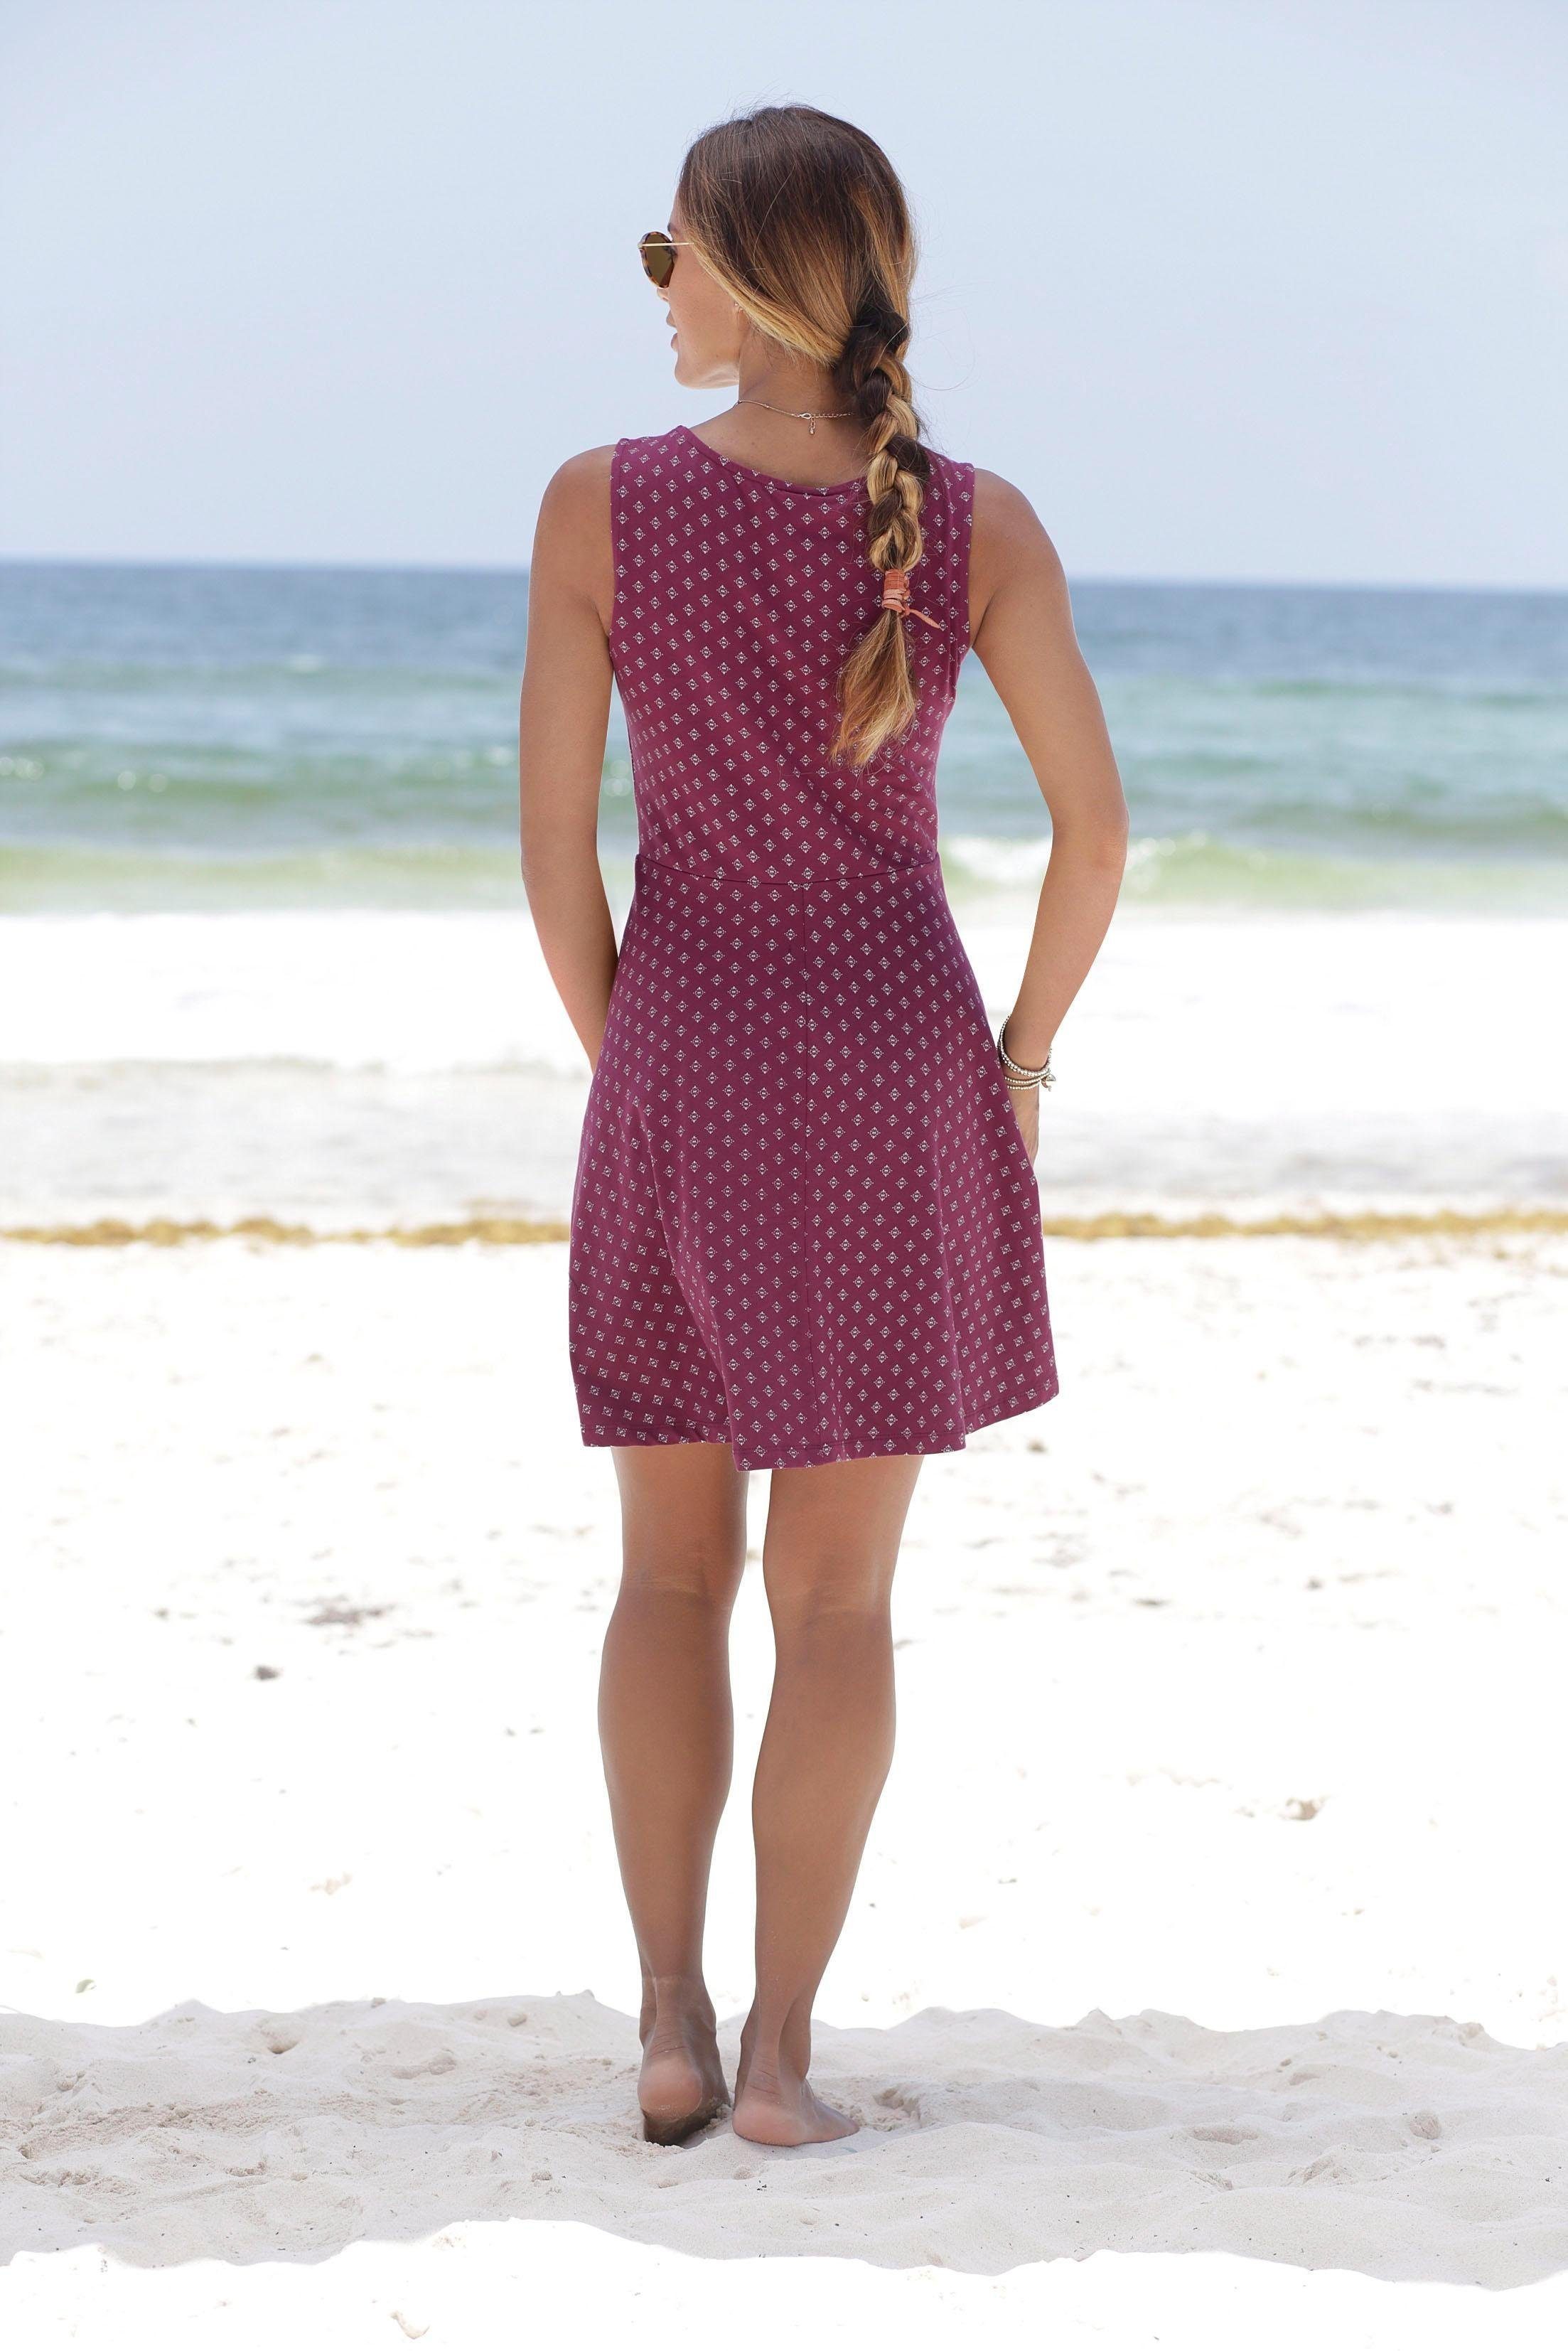 Beachtime Alloverdruck mit Strandkleid